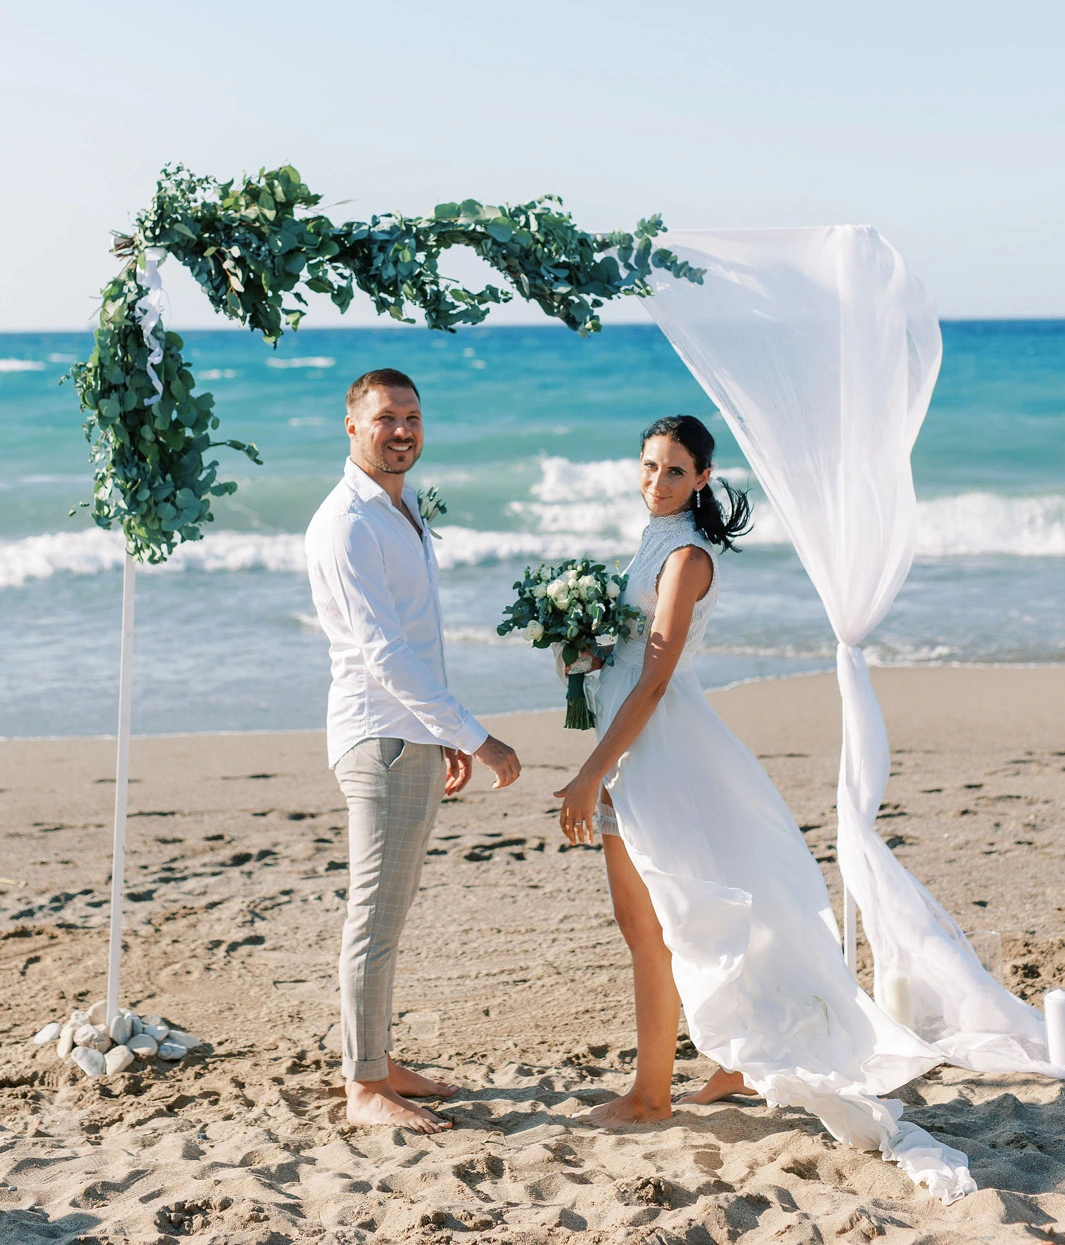 Crete Weddings - Crete Wedding Planners - Luxury Weddings in Crete - Weddings in Crete Greece - Margarita Weddings Crete Greece - Wedding Venue Crete Greece